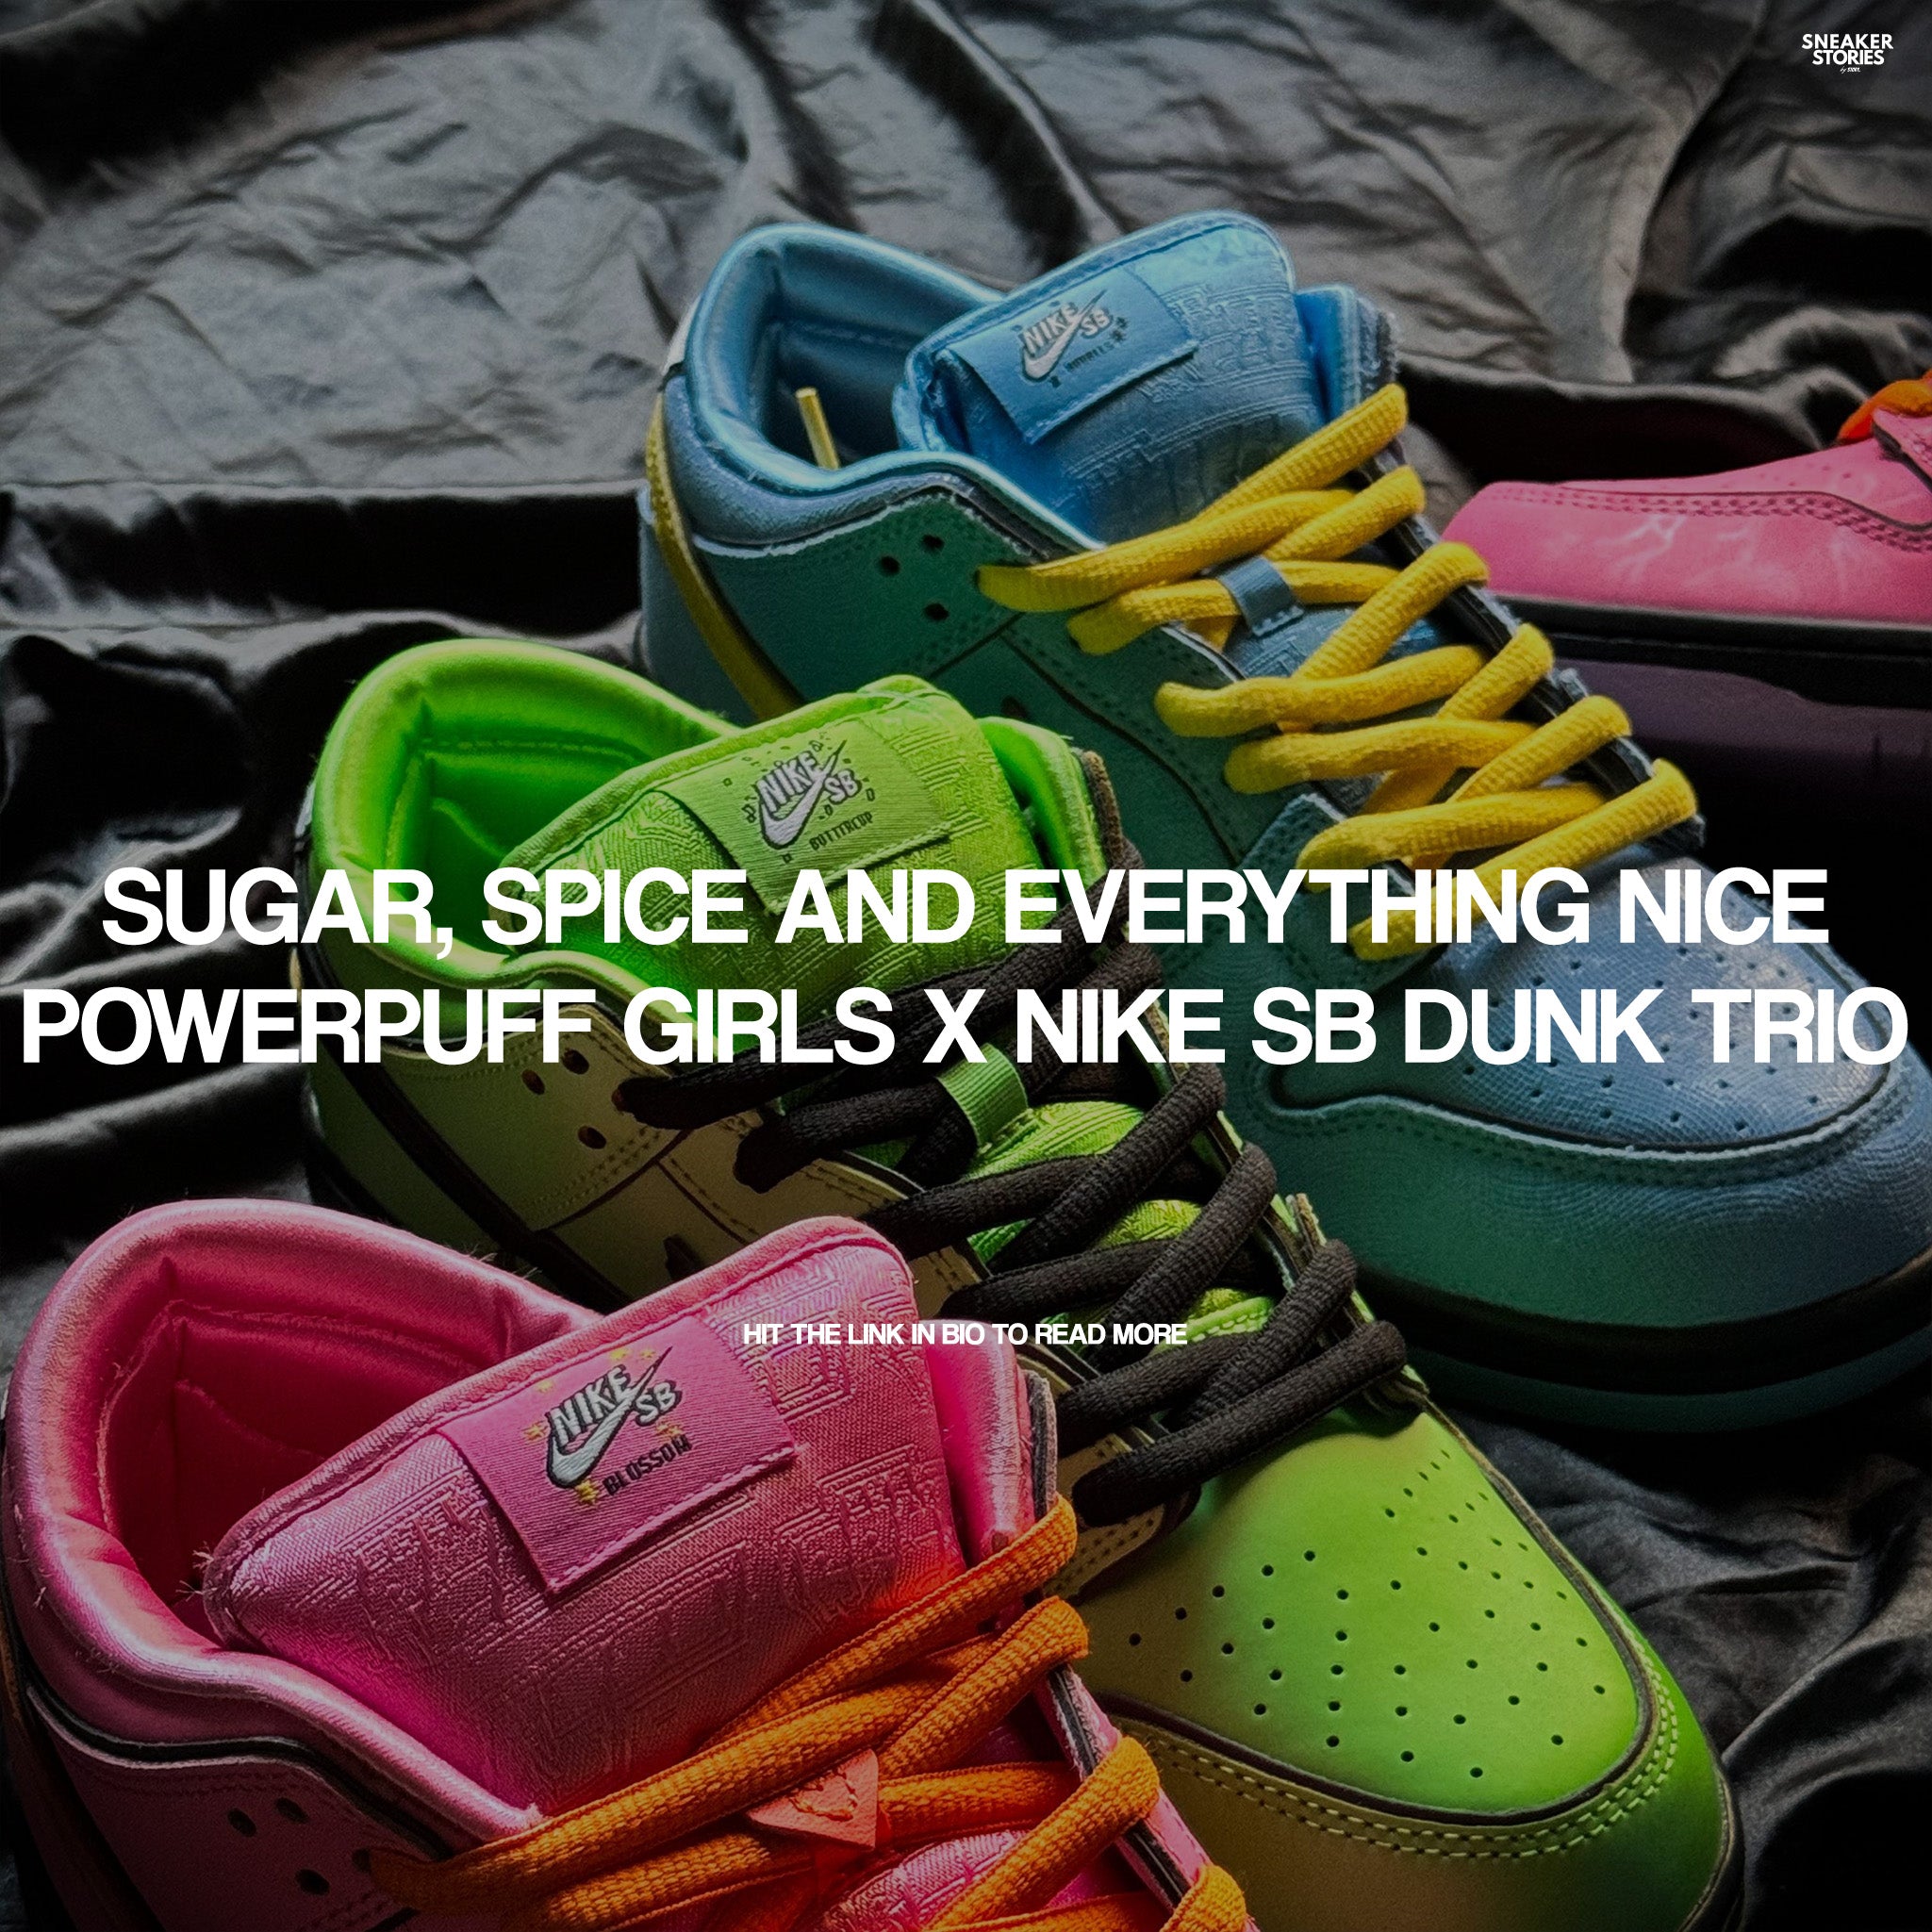 Sugar, spice and everything nice Powerpuff girls x Nike SB dunk trio